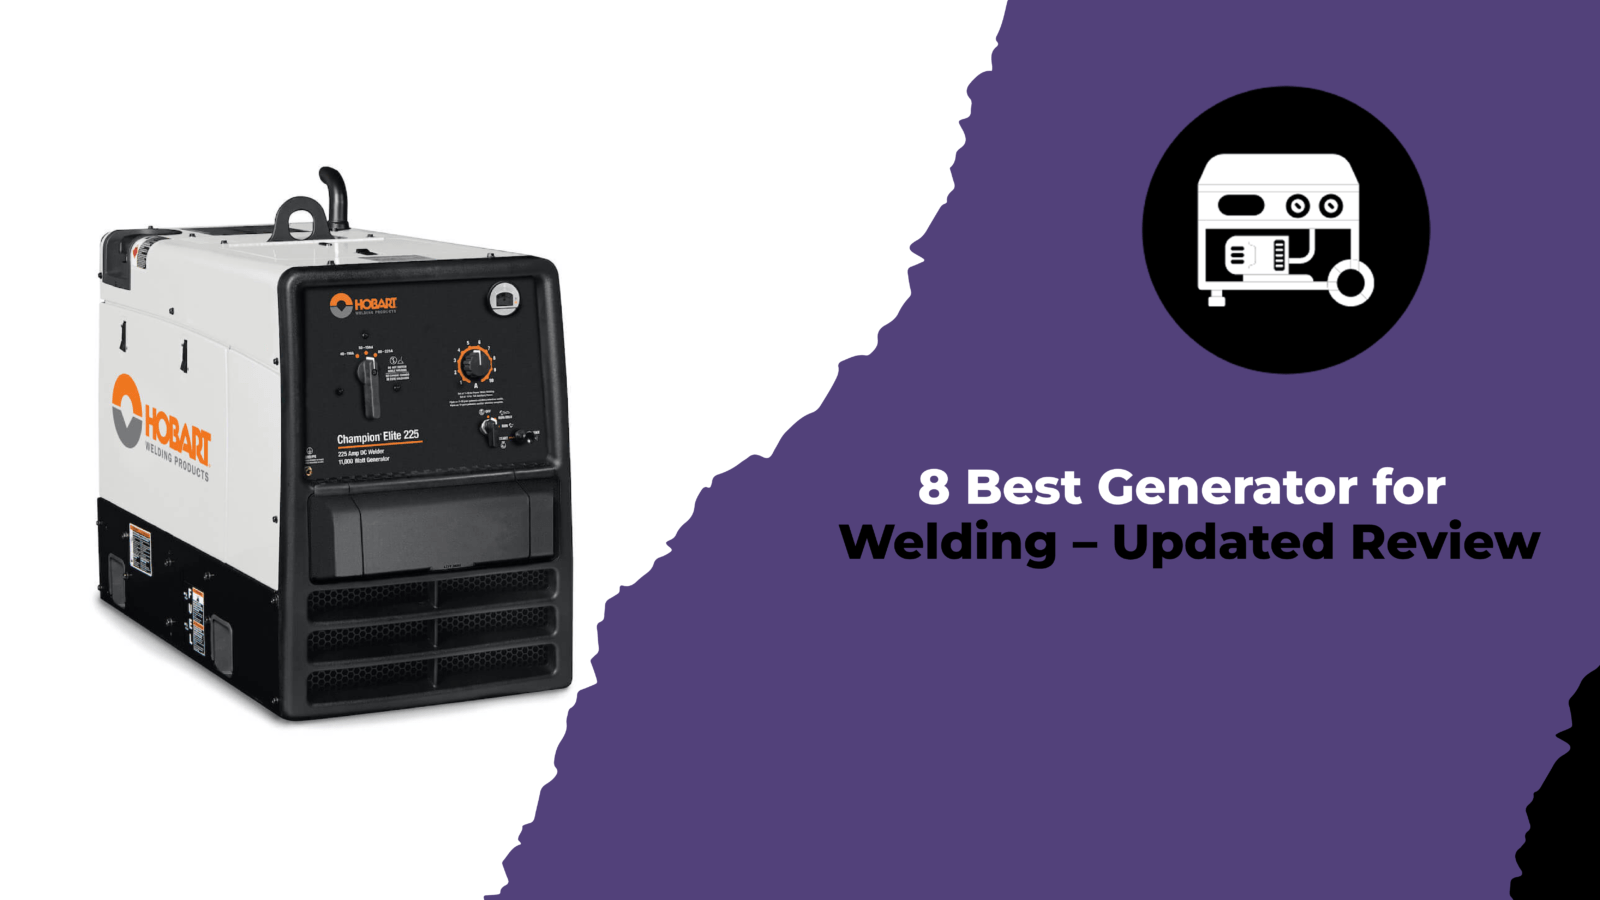 8 Best Generator for Welding - Updated Review